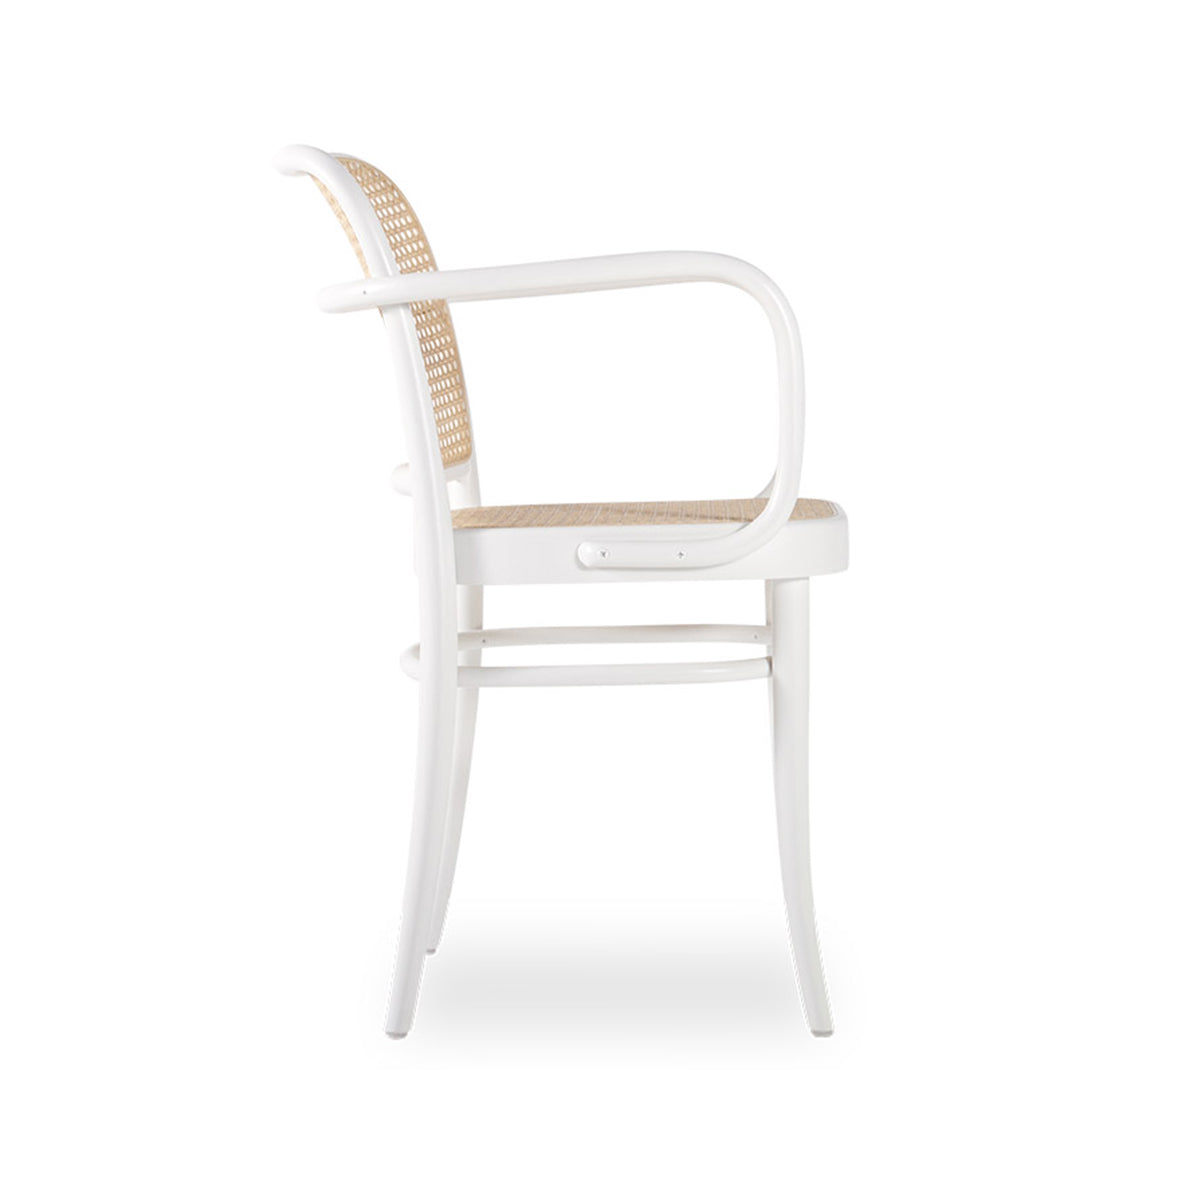 811 Hoffmann Armchair - Cane Seat/Cane Backrest (White).